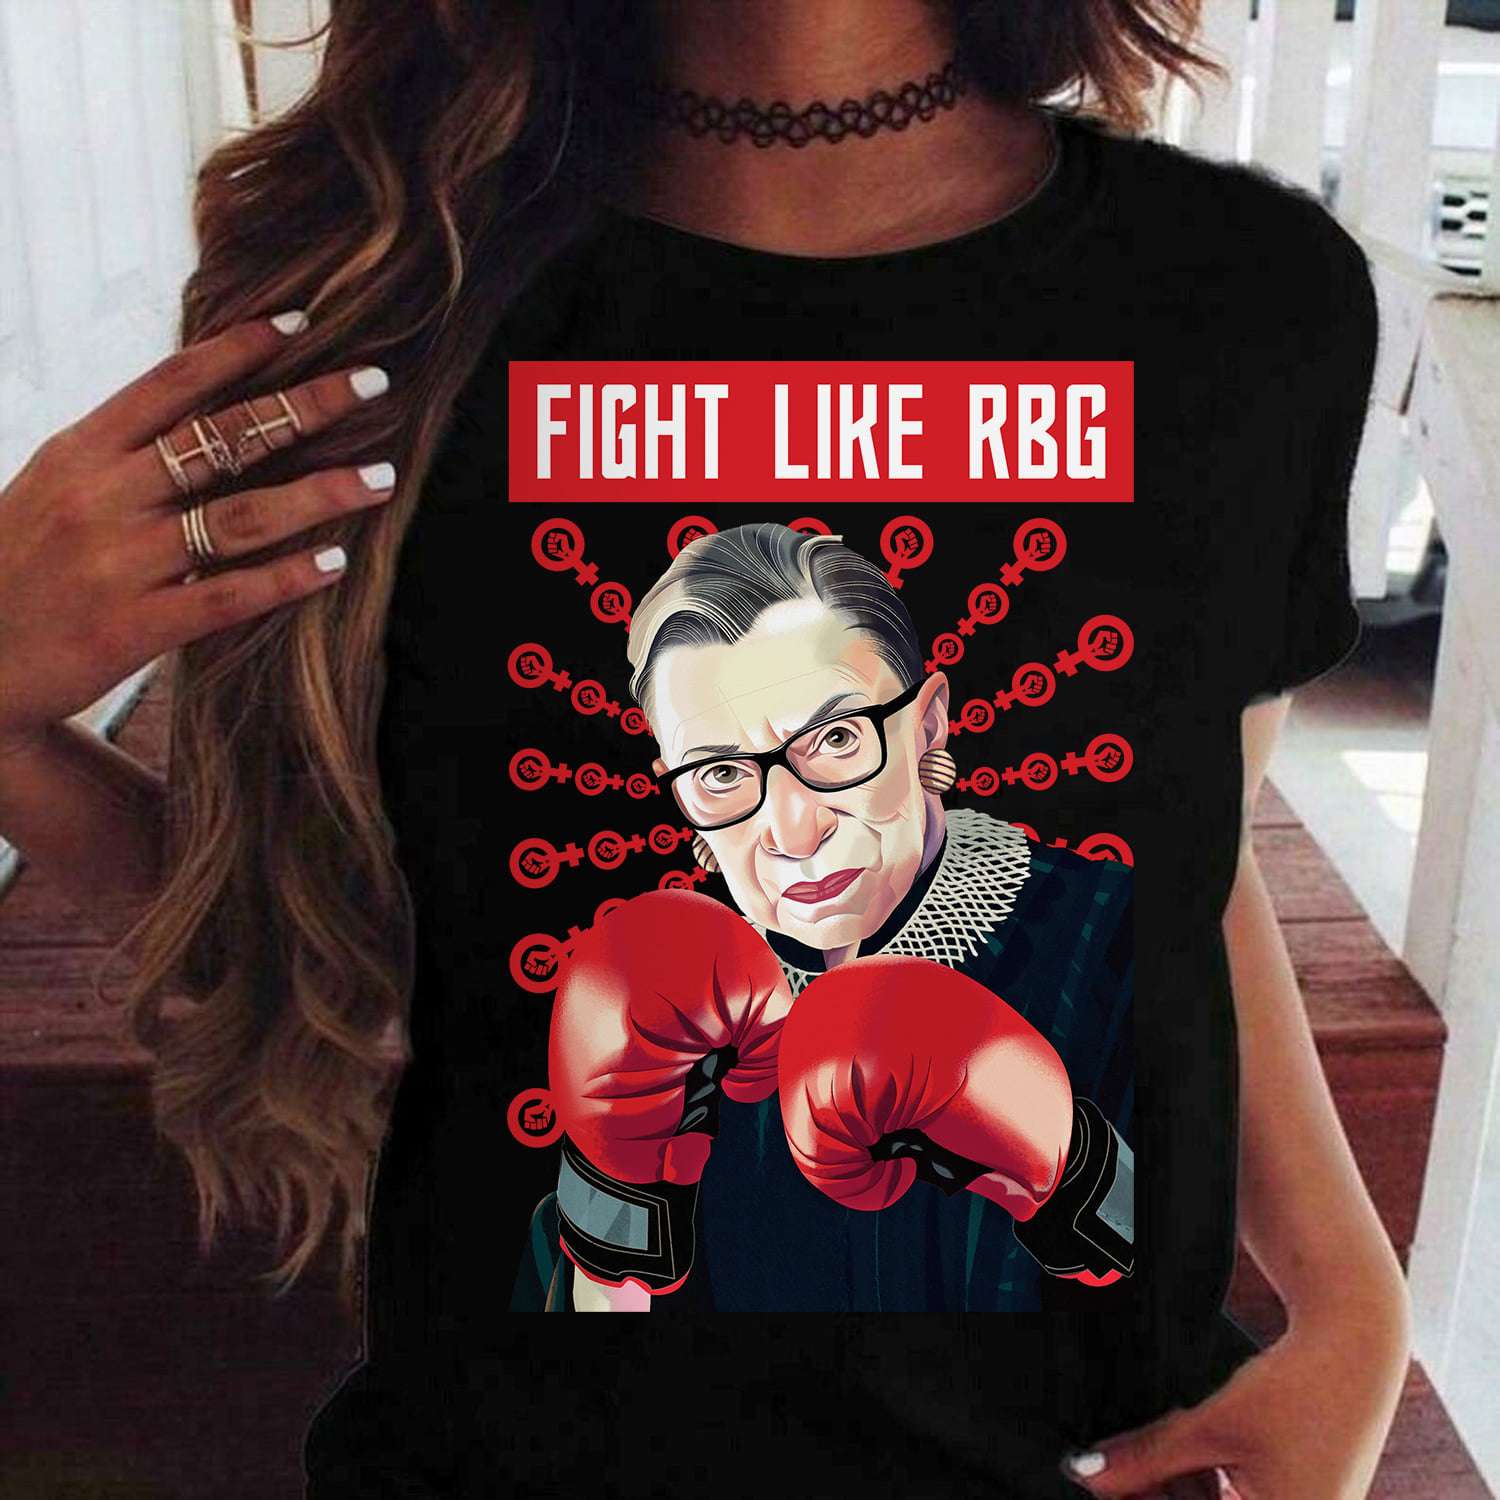 Fight like rbg - Ruth Bader Ginsburg, Fight like a girl